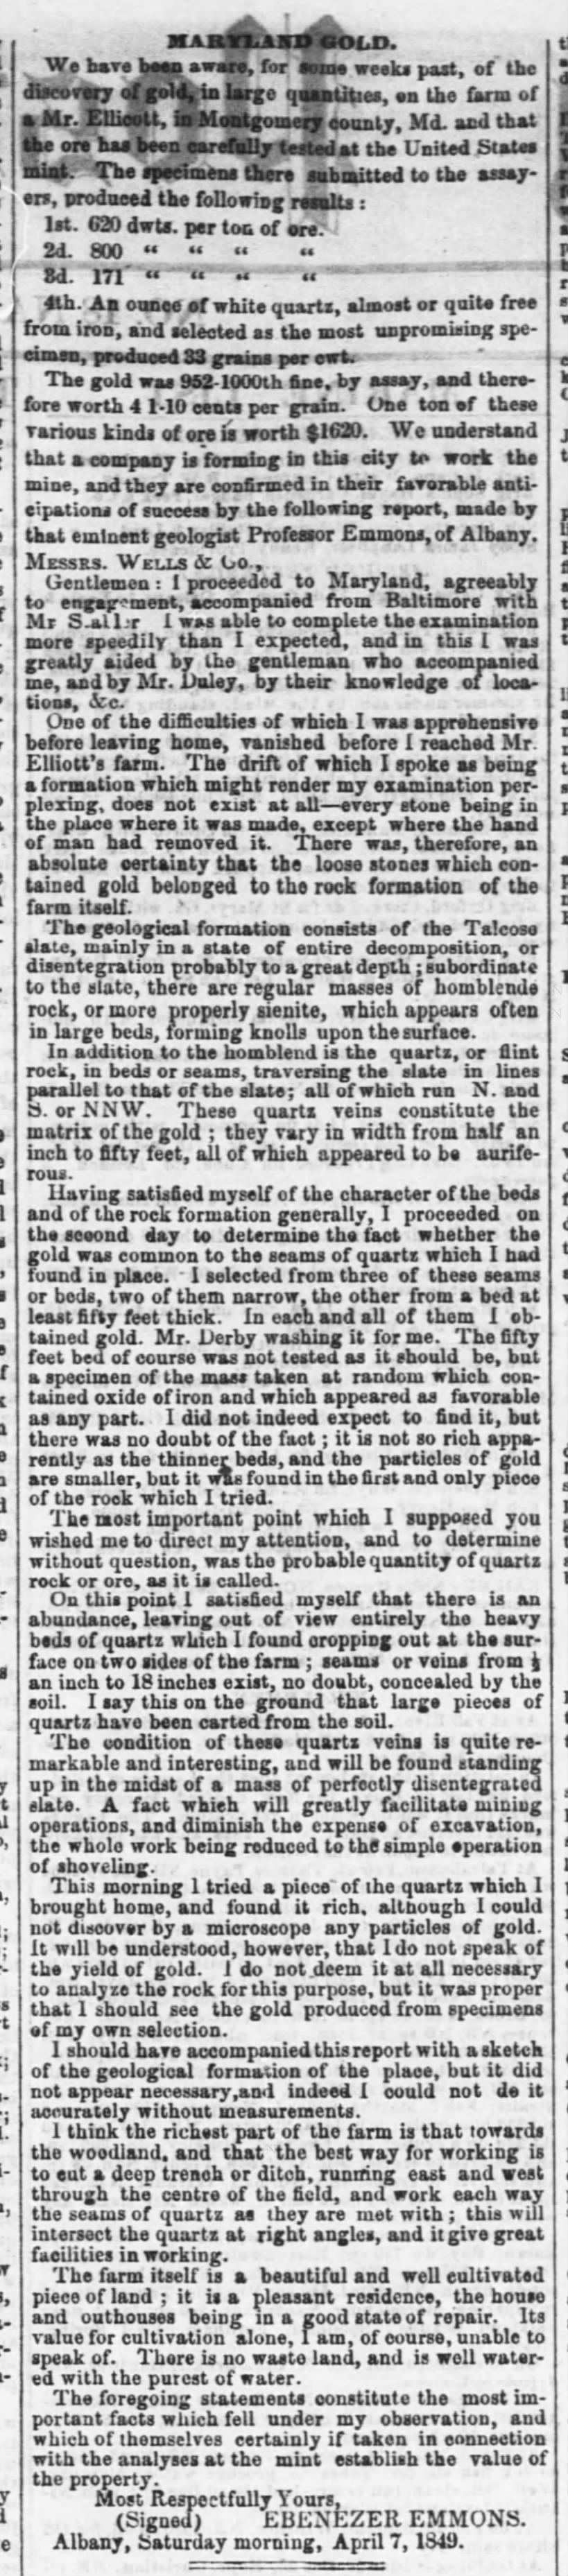 Emmons 13 April 1849 The Evening Post (New York, New York) p.2.